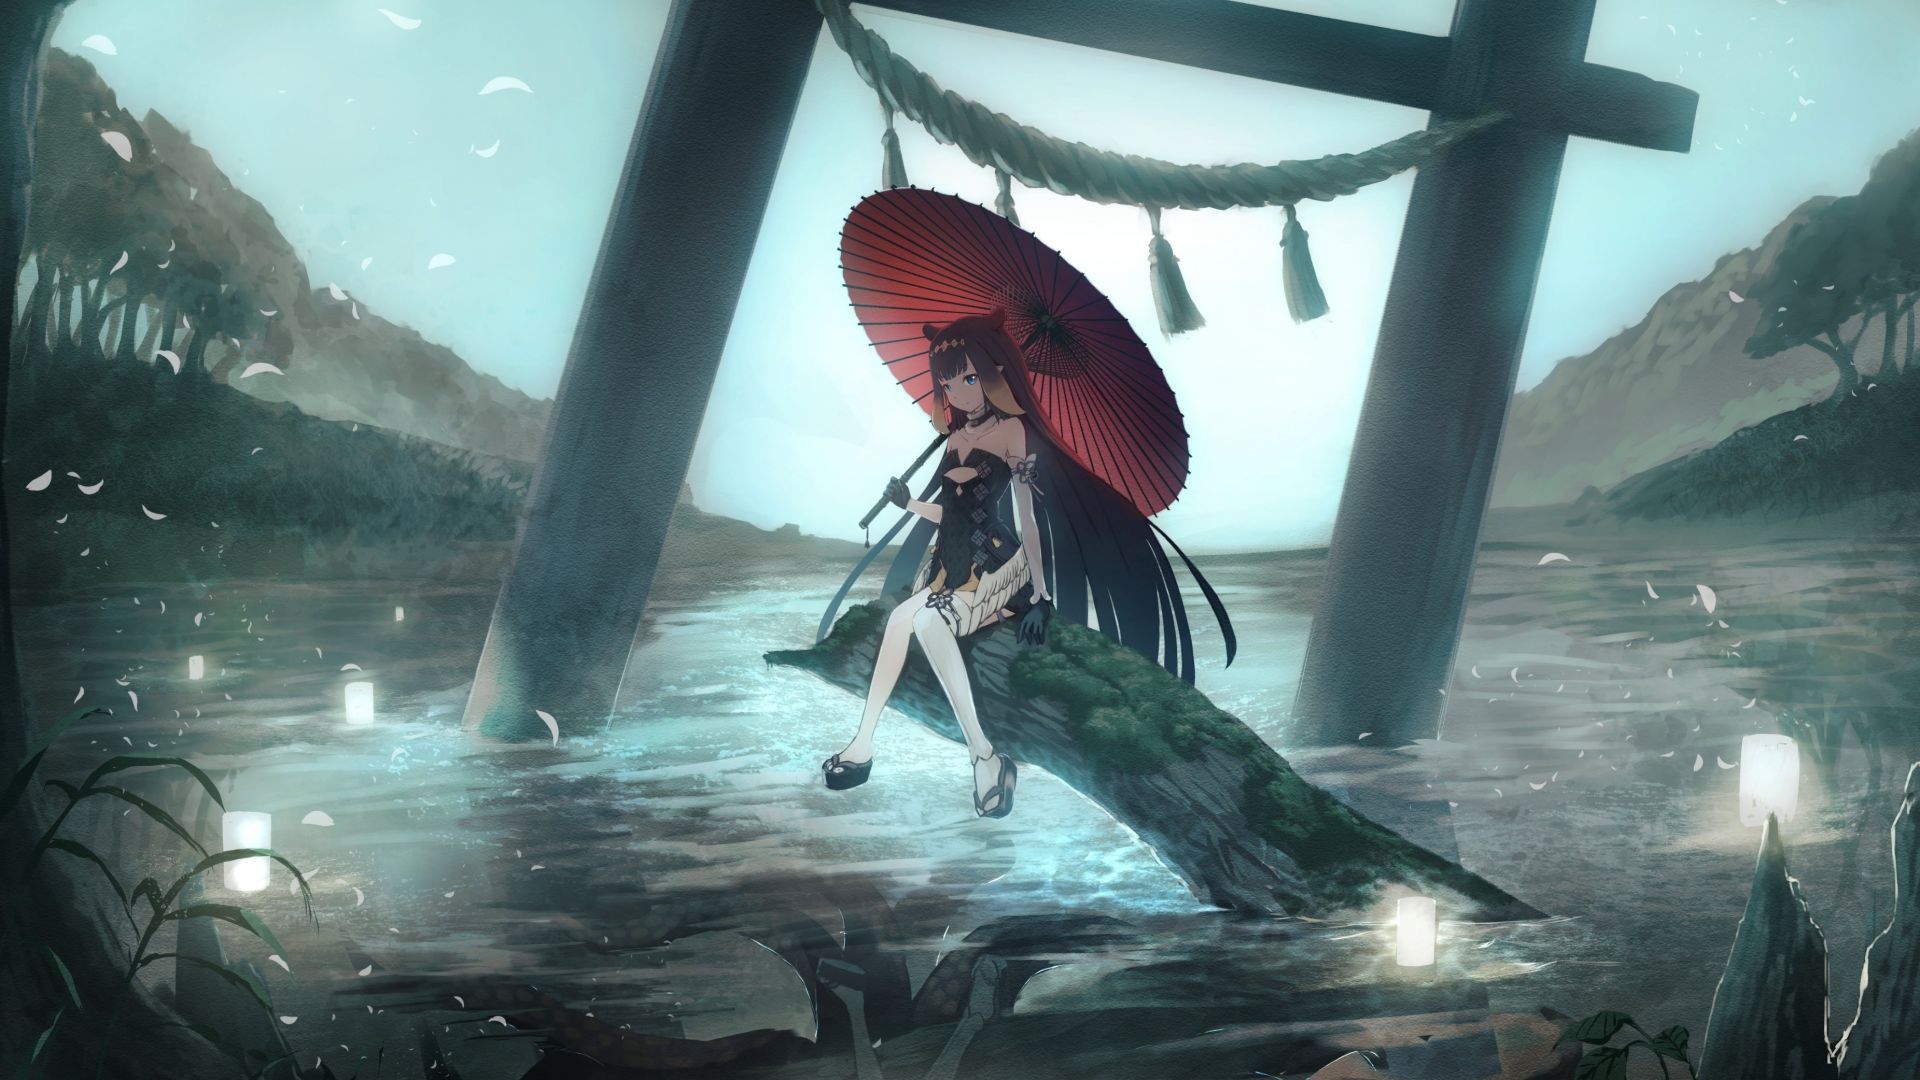 Alone, anime girl with umbrella, original wallpaper, HD image, picture, background, 3bafe5